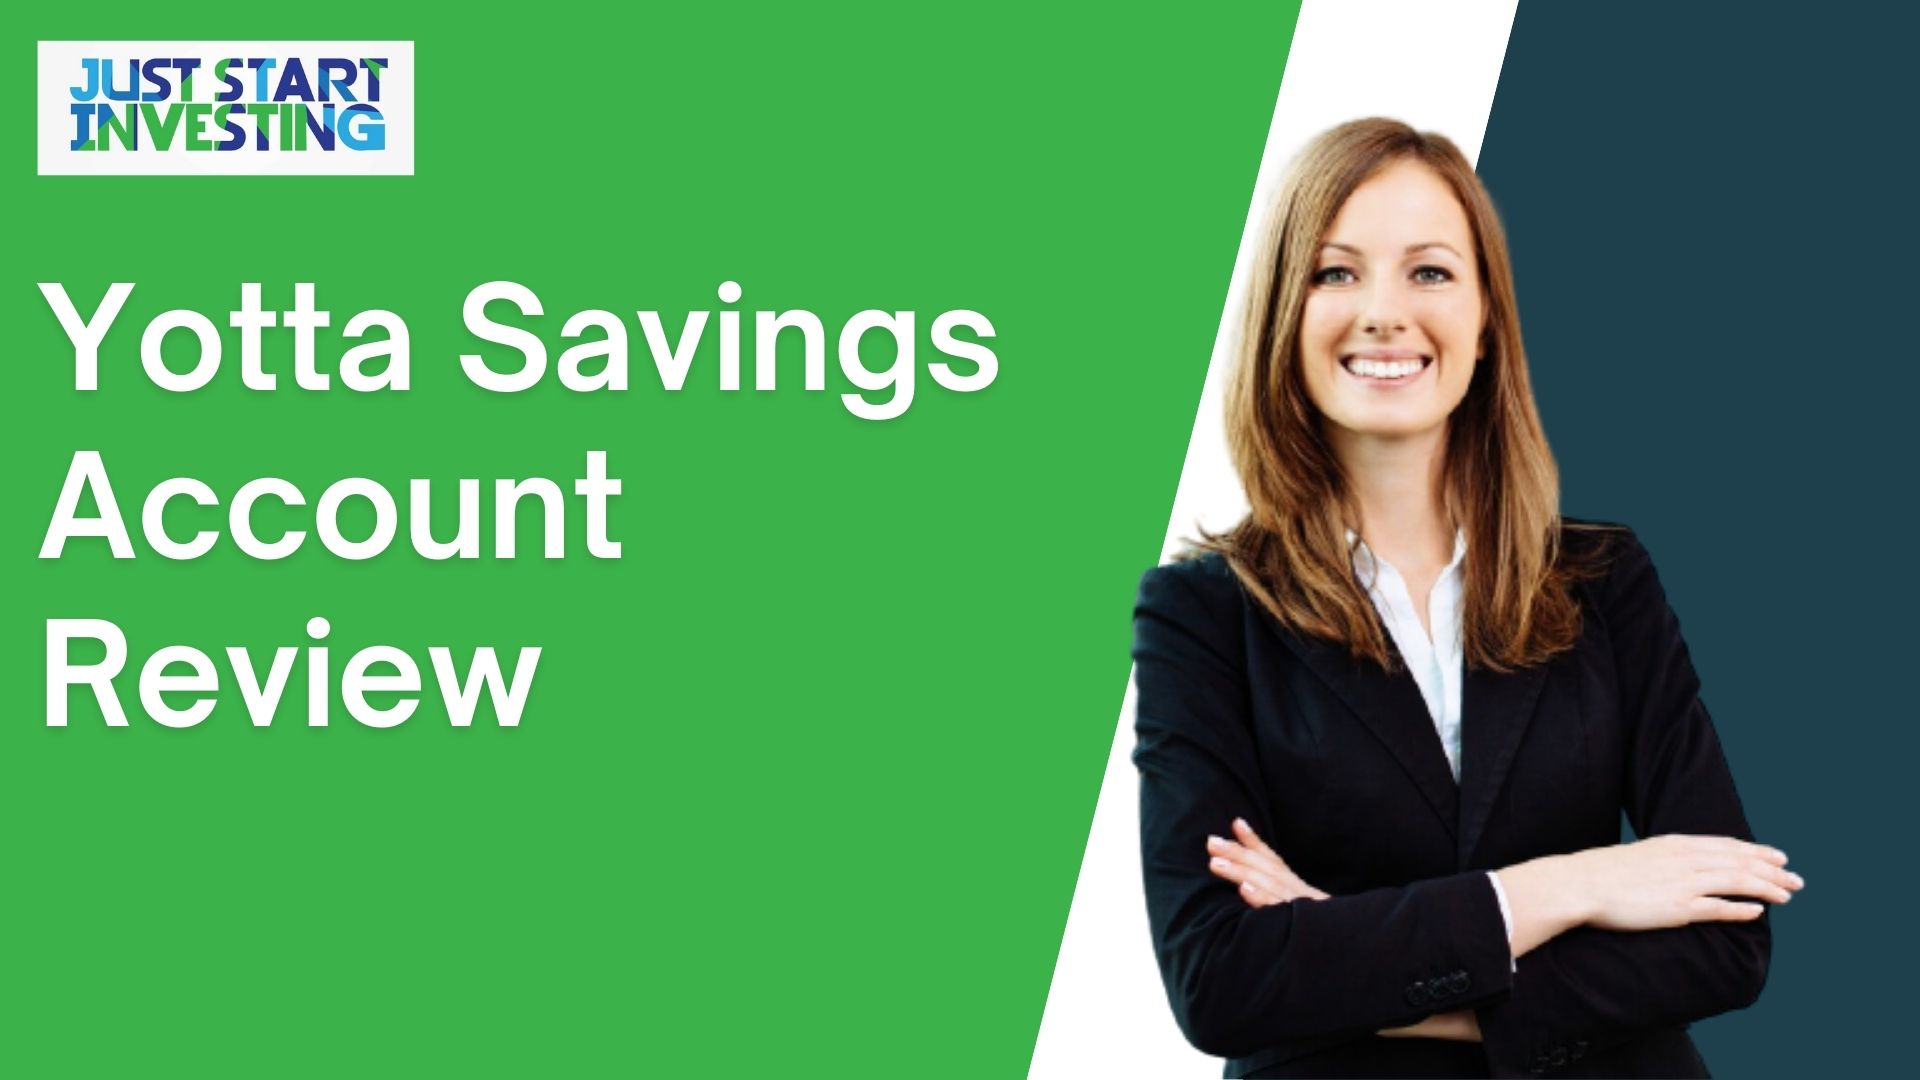 Yotta Savings Account Review